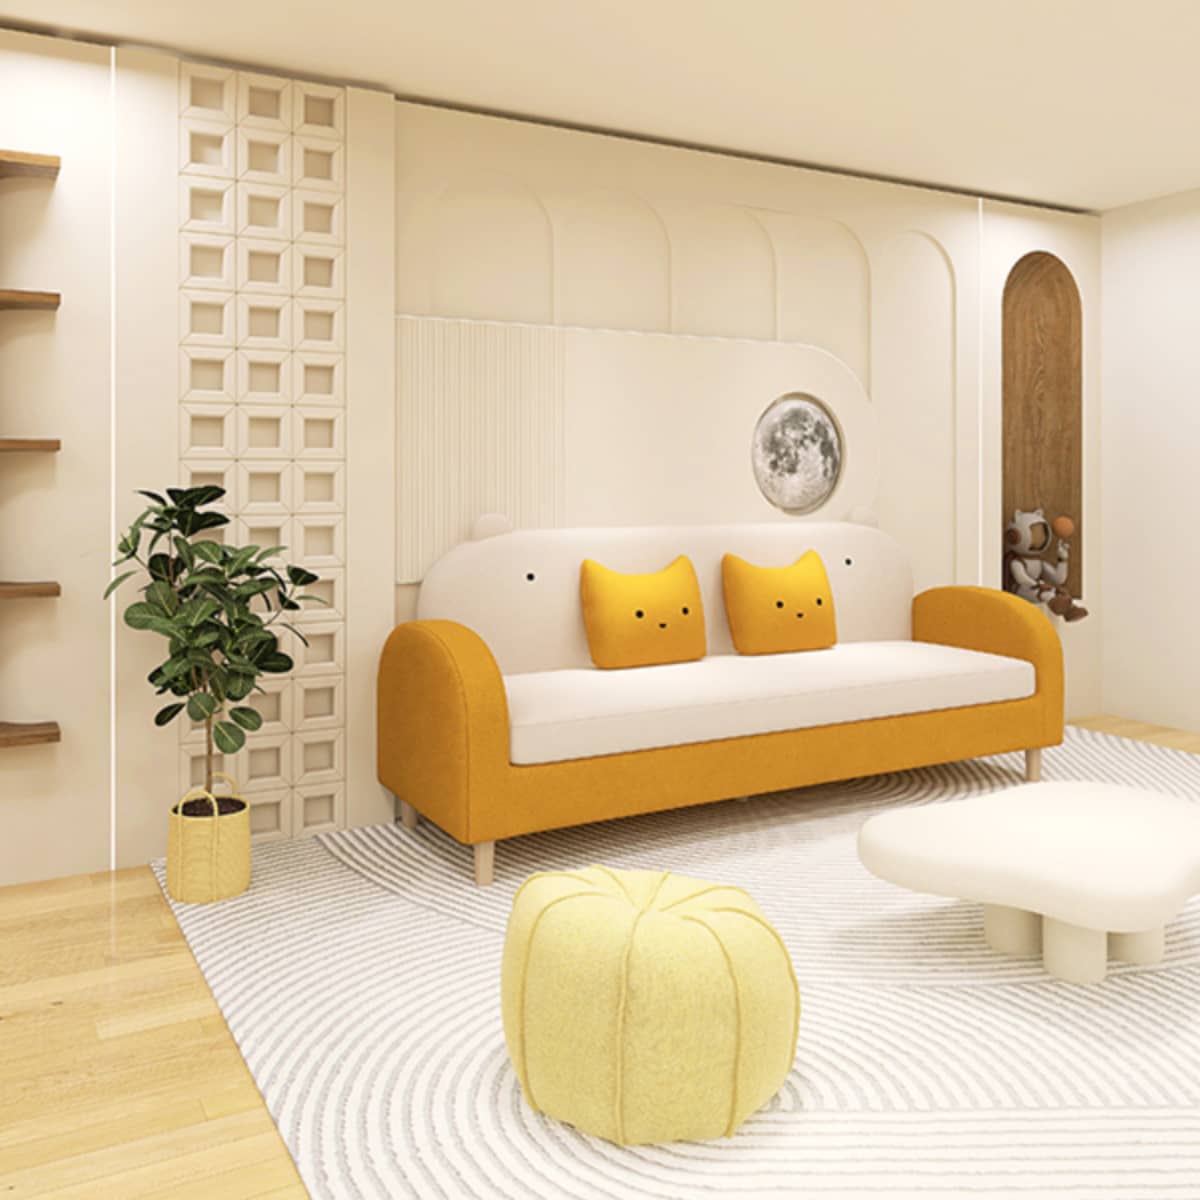 Modern Techno Fabric Sofa Set in Orange, Off-White, Dark Blue, and Green with Elegant Wood Accents qm-1